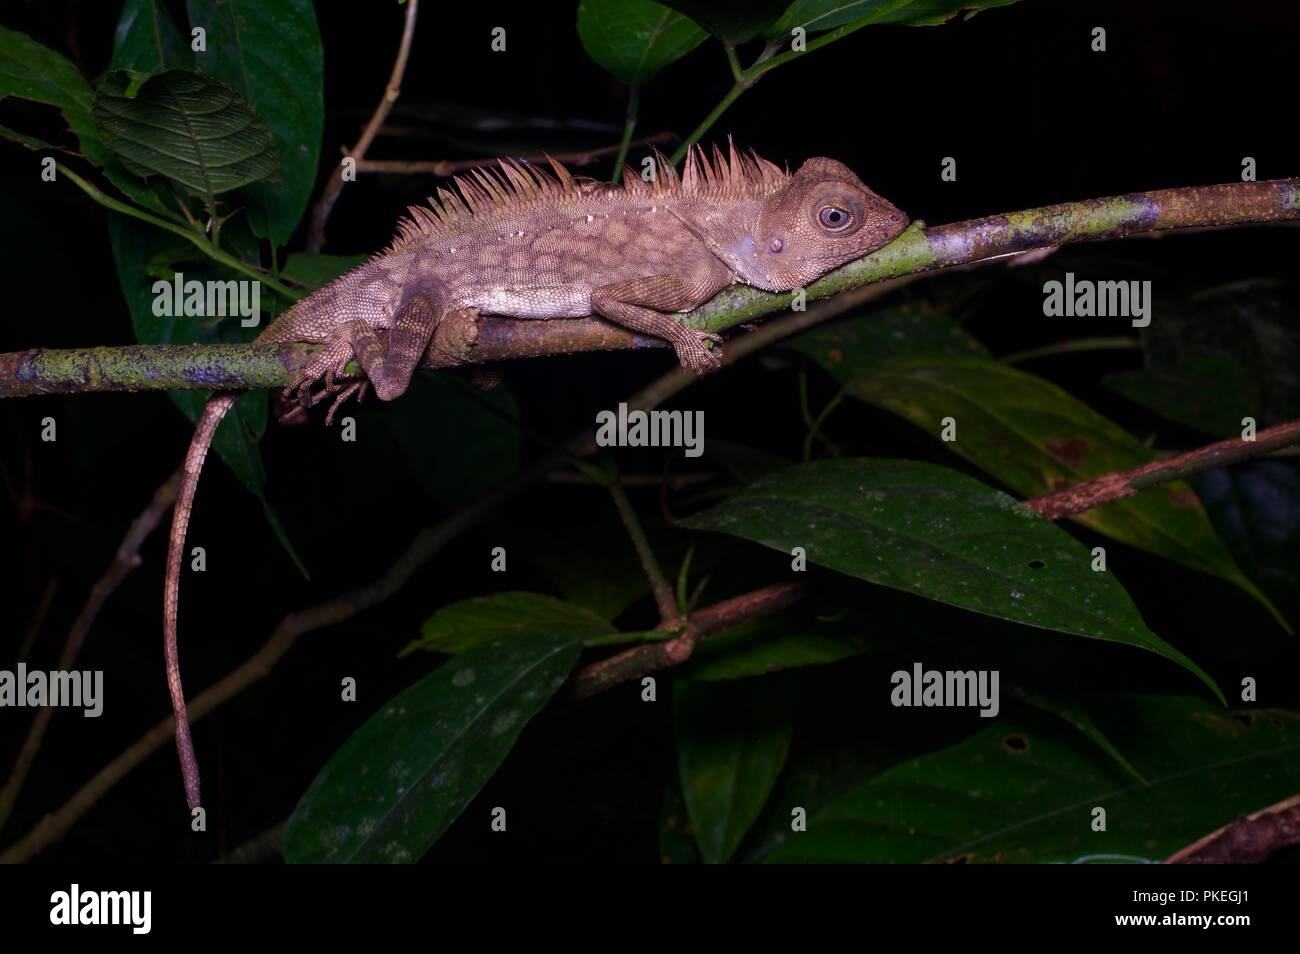 A Borneo Angle-headed Lizard (Gonocephalus bornensis) resting at night in the rainforest of Gunung Mulu National Park, Sarawak, East Malaysia, Borneo Stock Photo